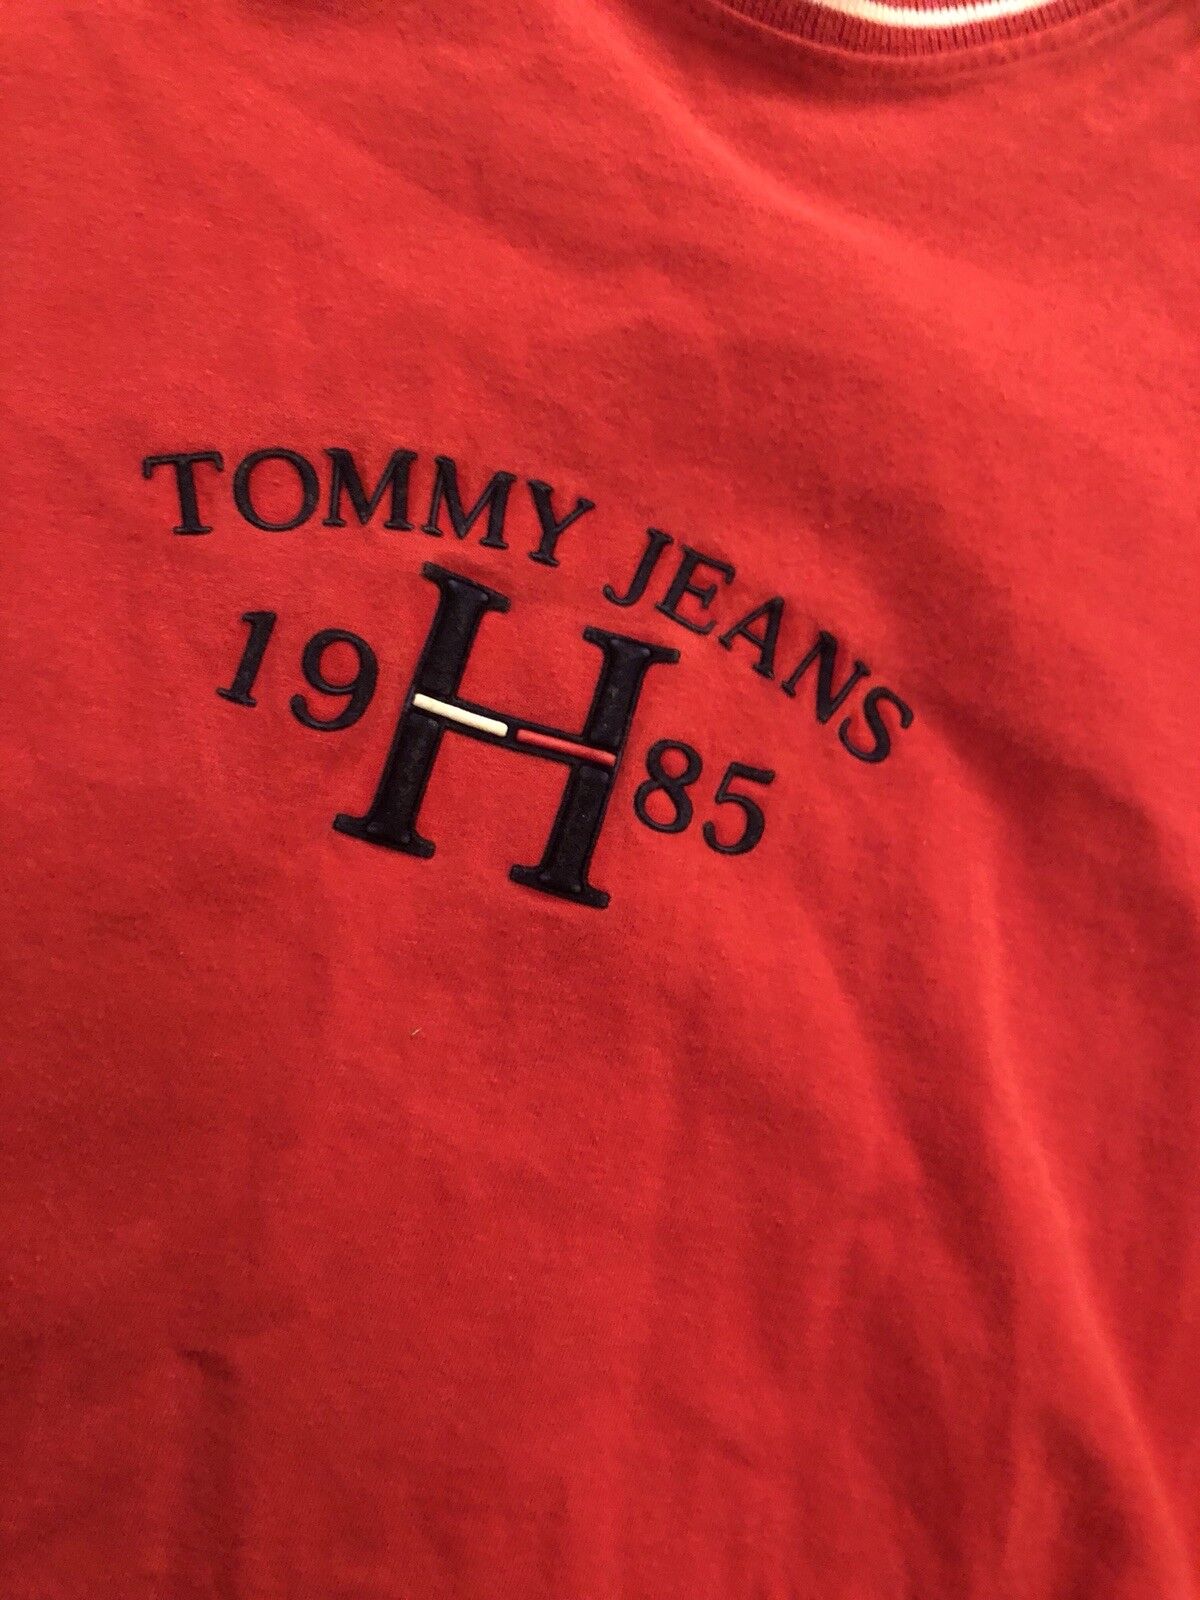 Vintage Tommy Jeans T Shirt Size Large